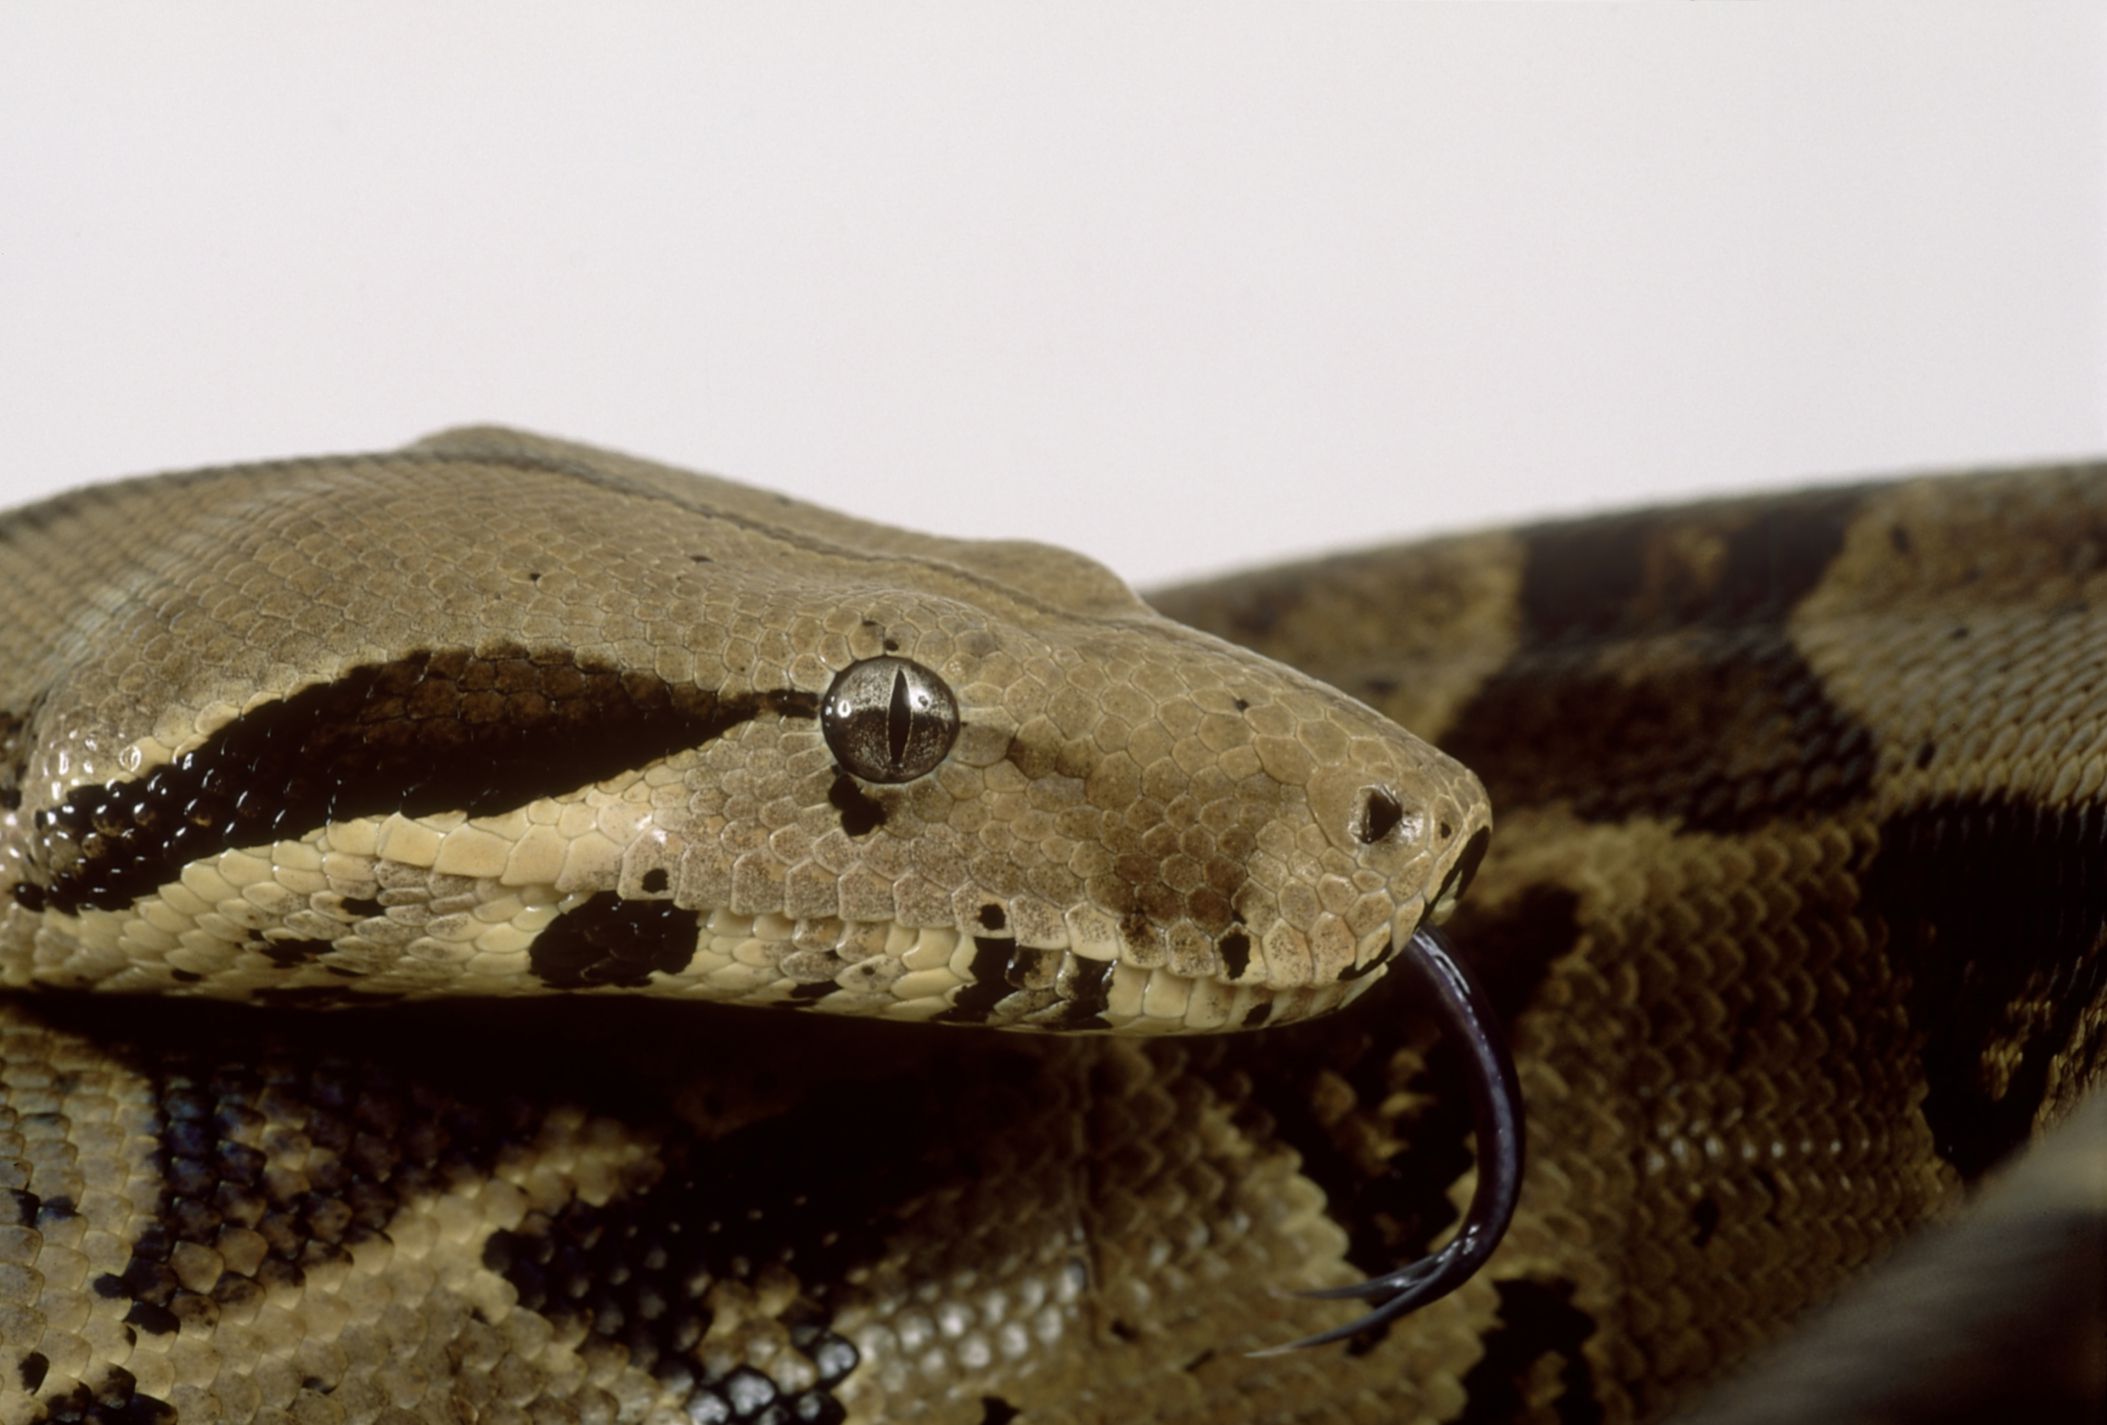 Retained Eye Caps in Snakes - Eye Caps - Shedding Snake